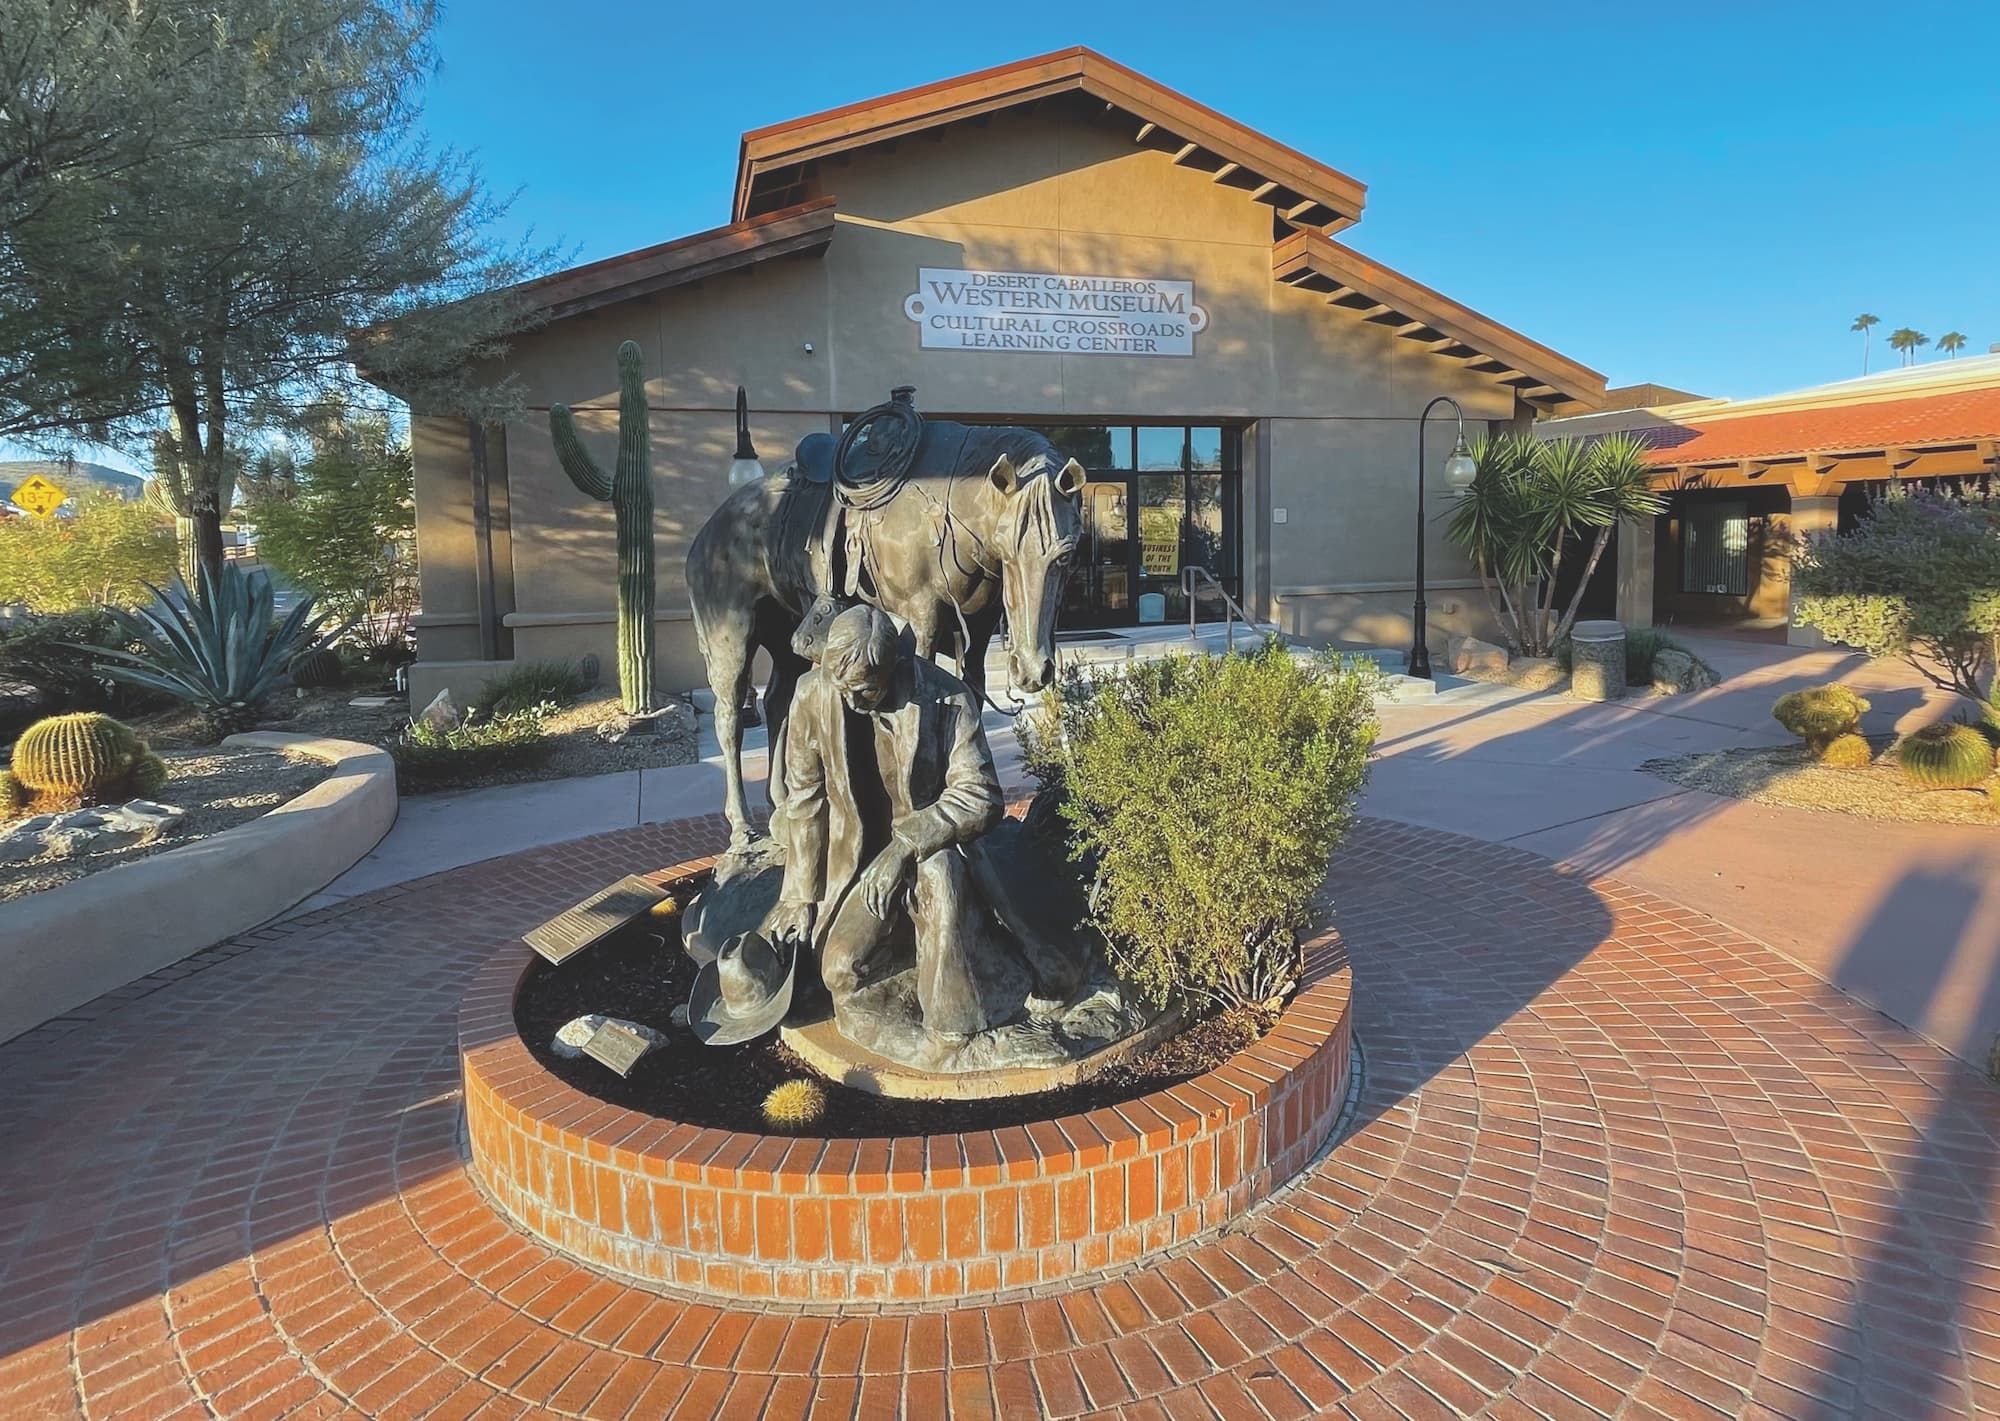 The Desert Caballeros Western Museum in Wickenburg, AZ.